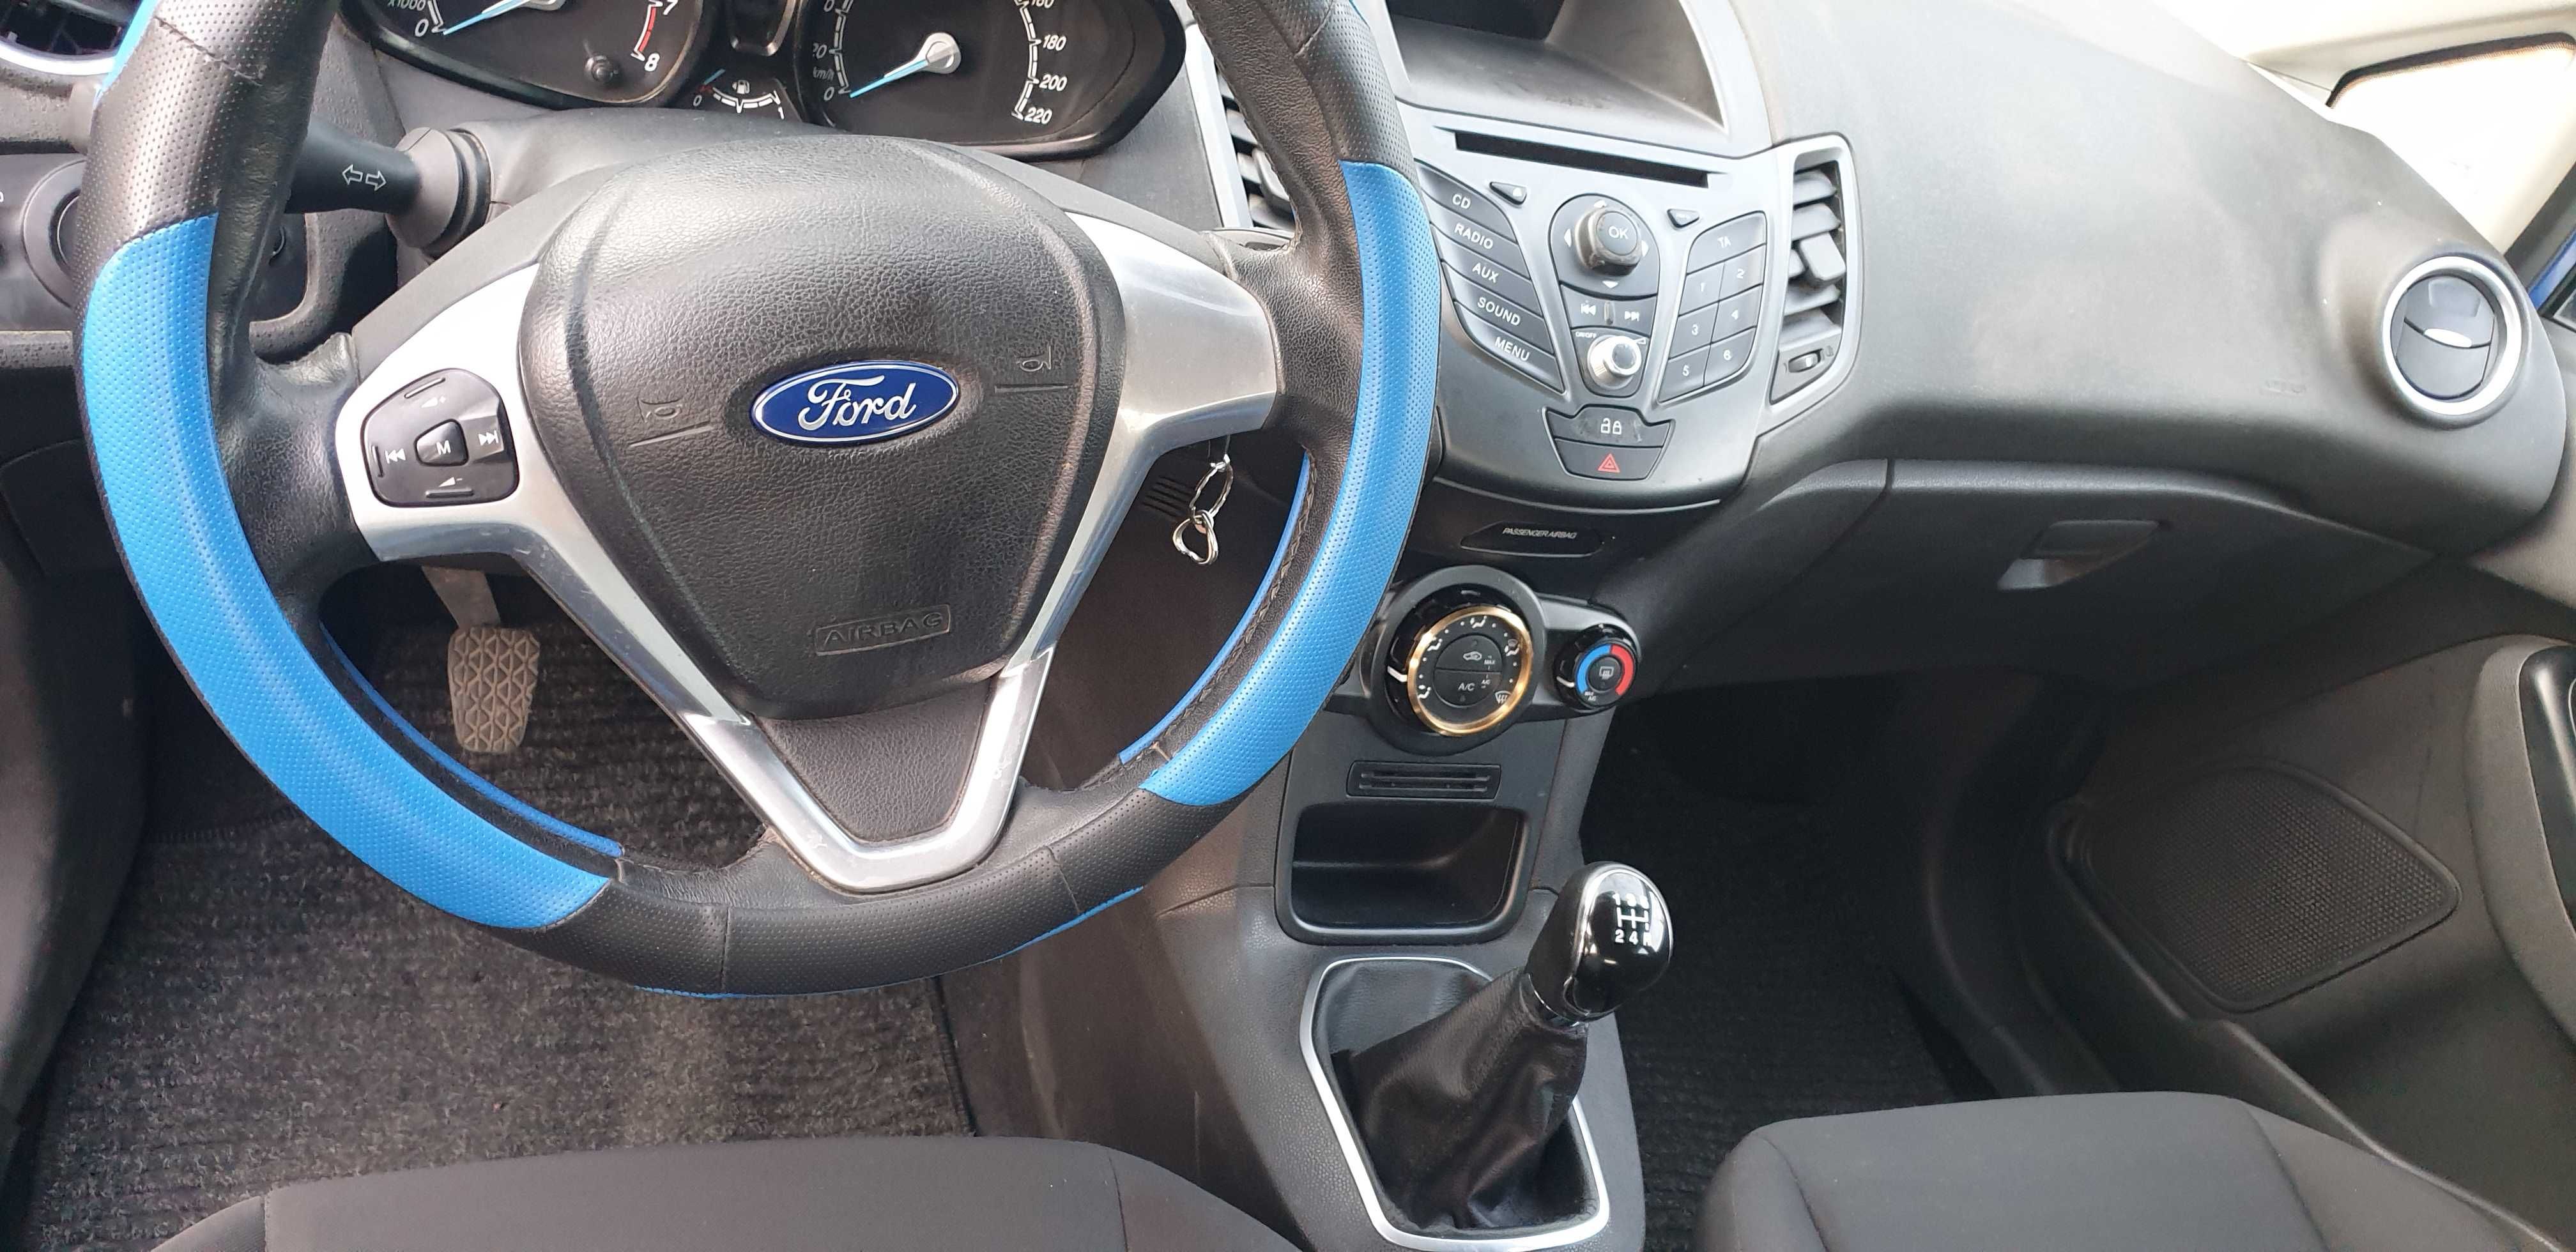 Авто Ford Fiesta 2013р.в, 31тис.